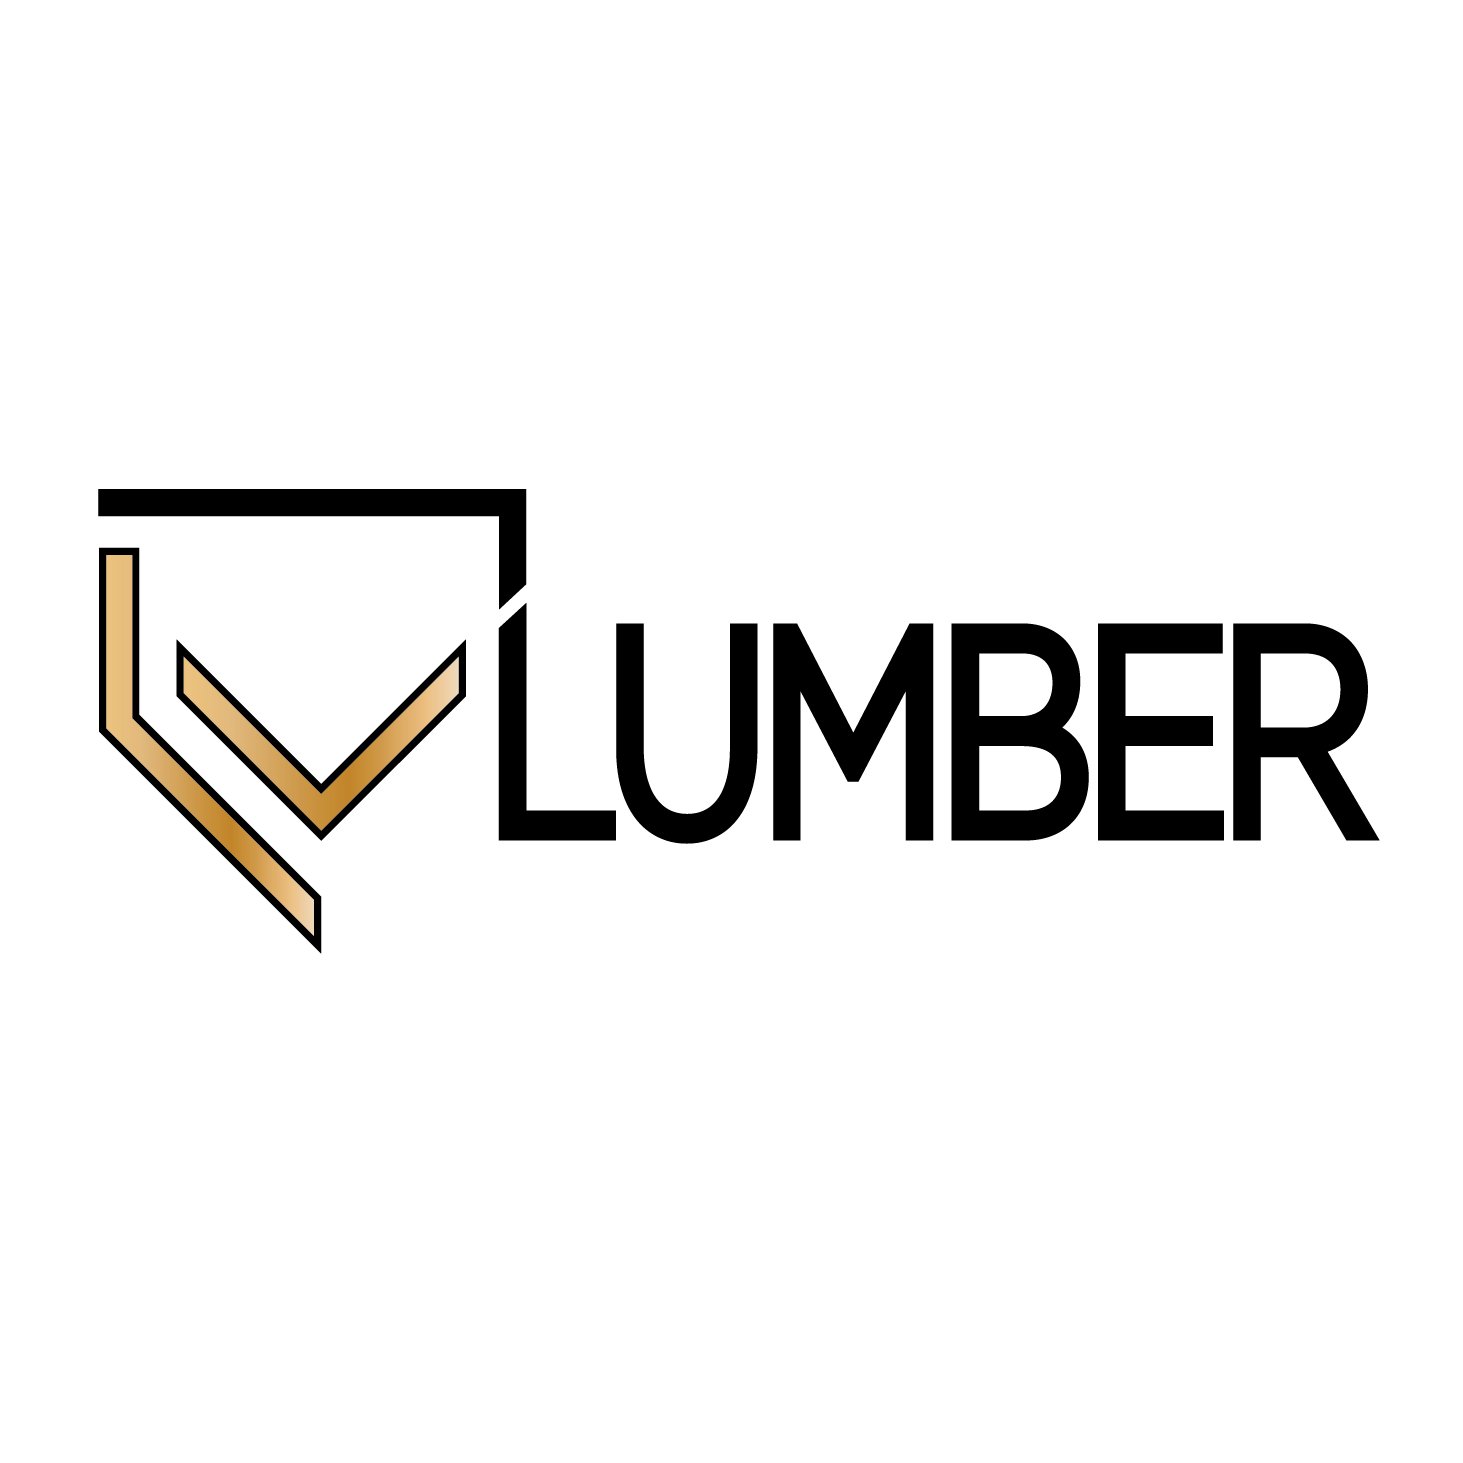 LV Lumber Bats Co.